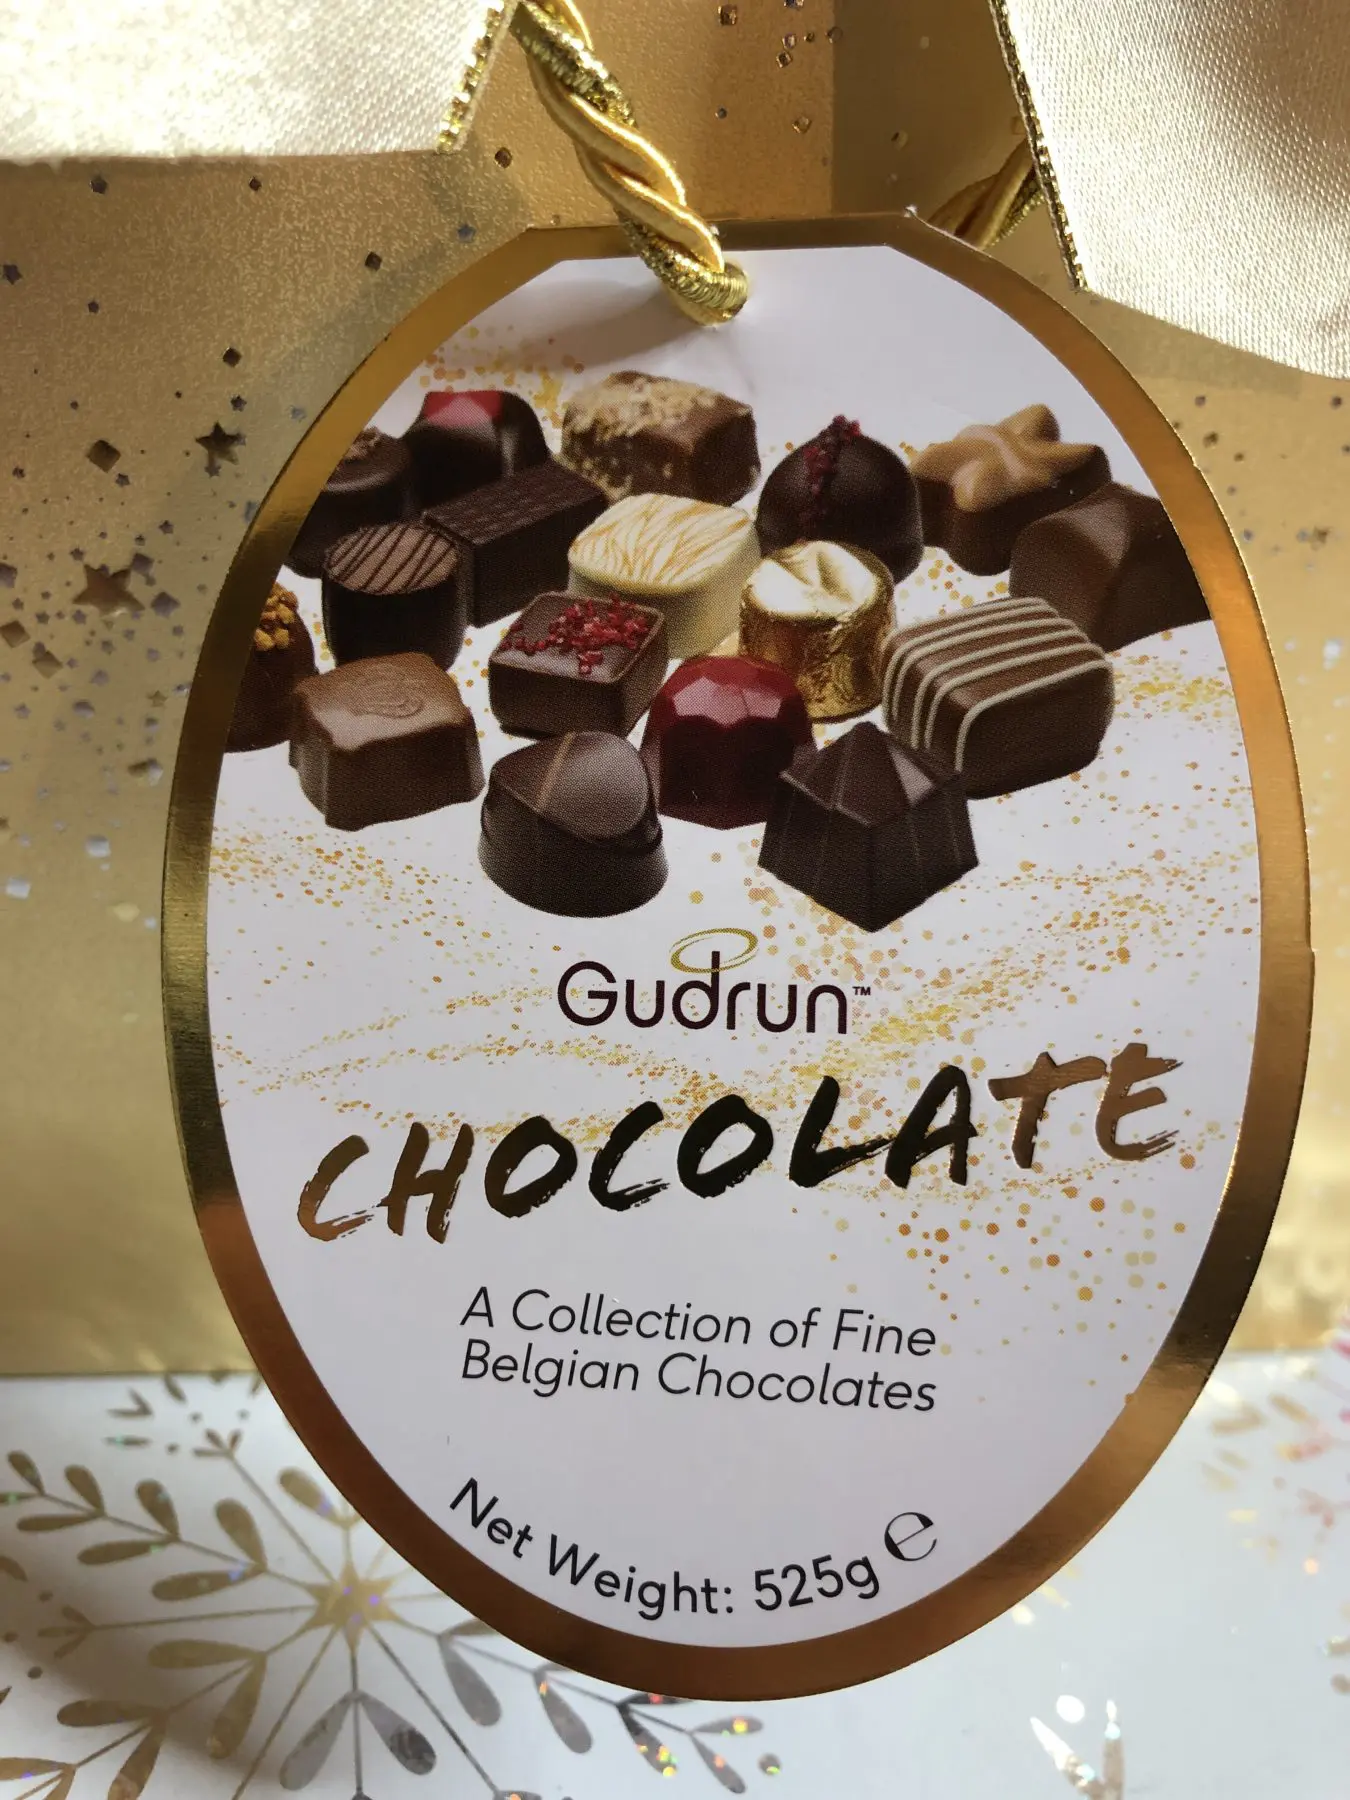 Gudrun Chocolate, a selection of fine Belgian chocolates